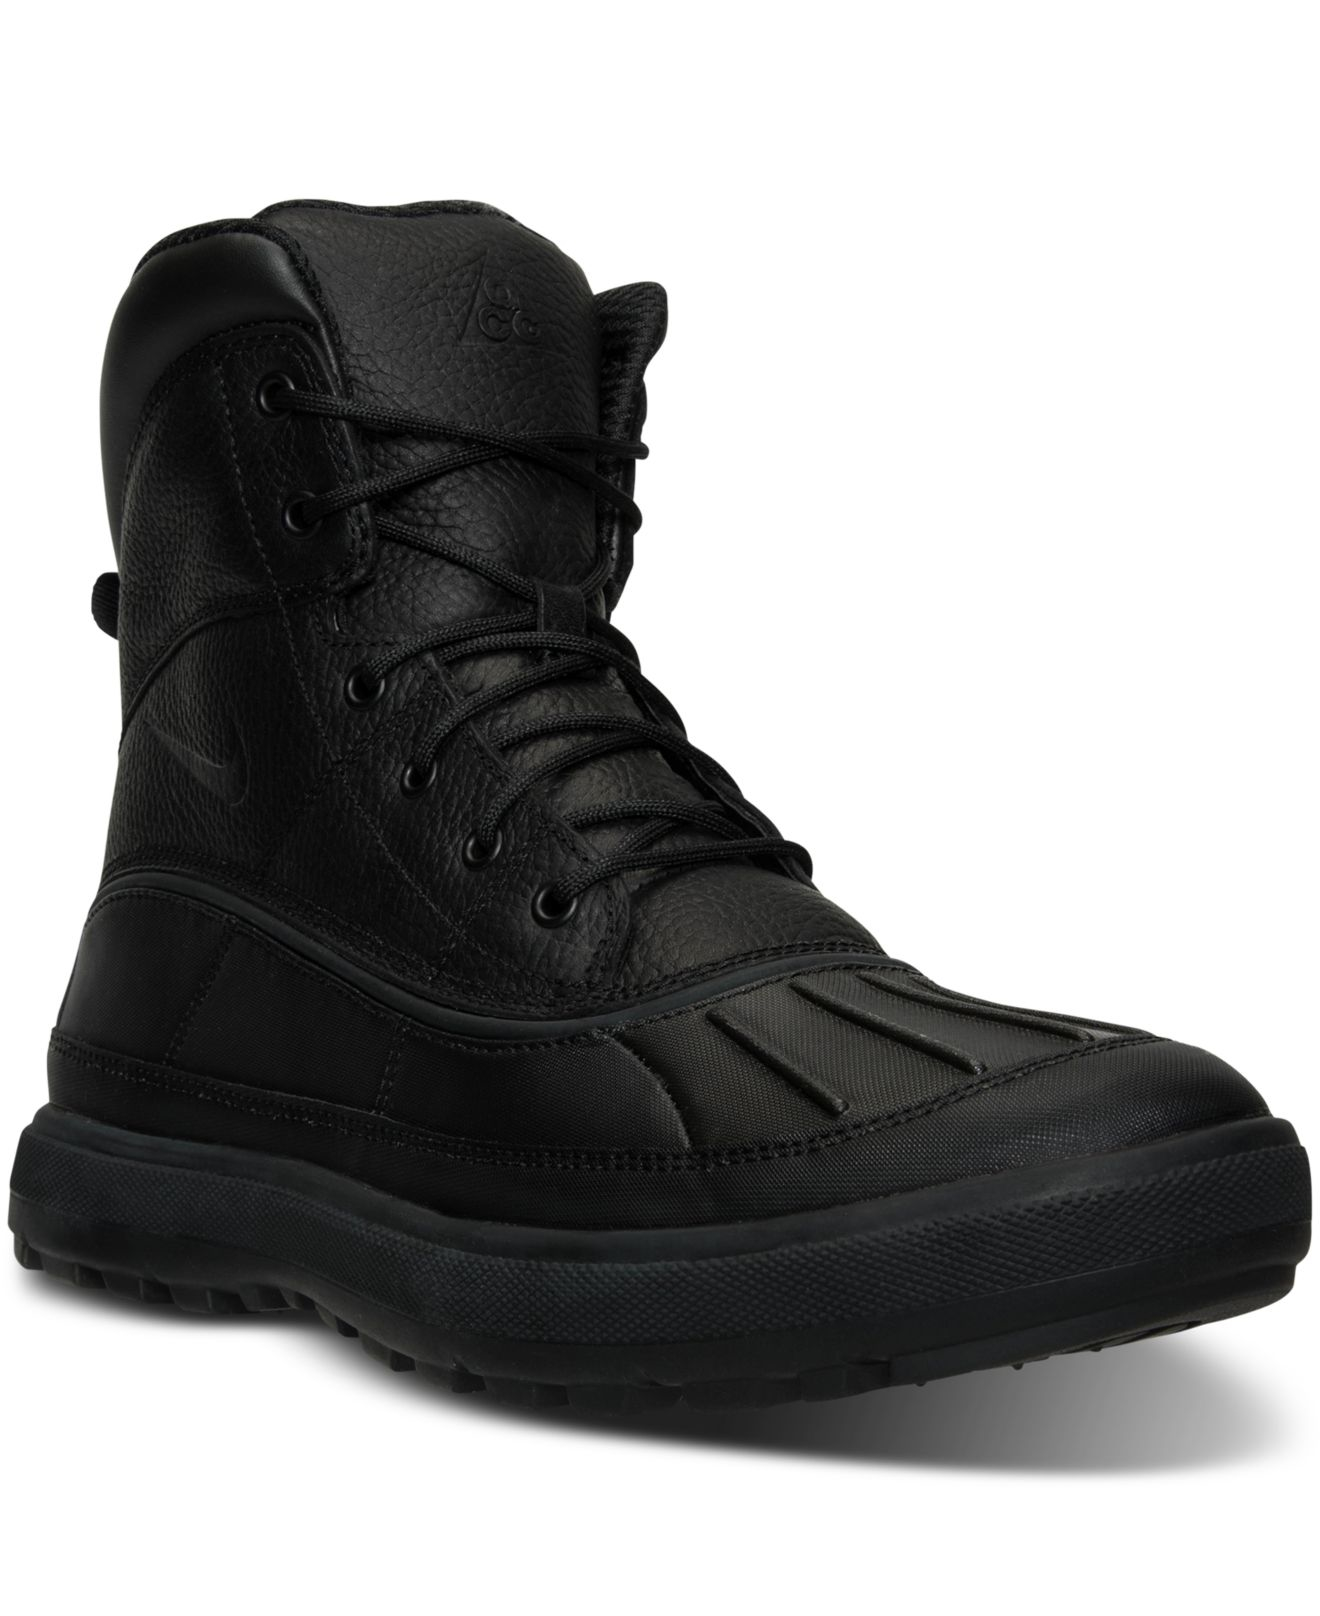 Nike Men's Woodside Ii Boots From Finish Line in Black for Men - Lyst